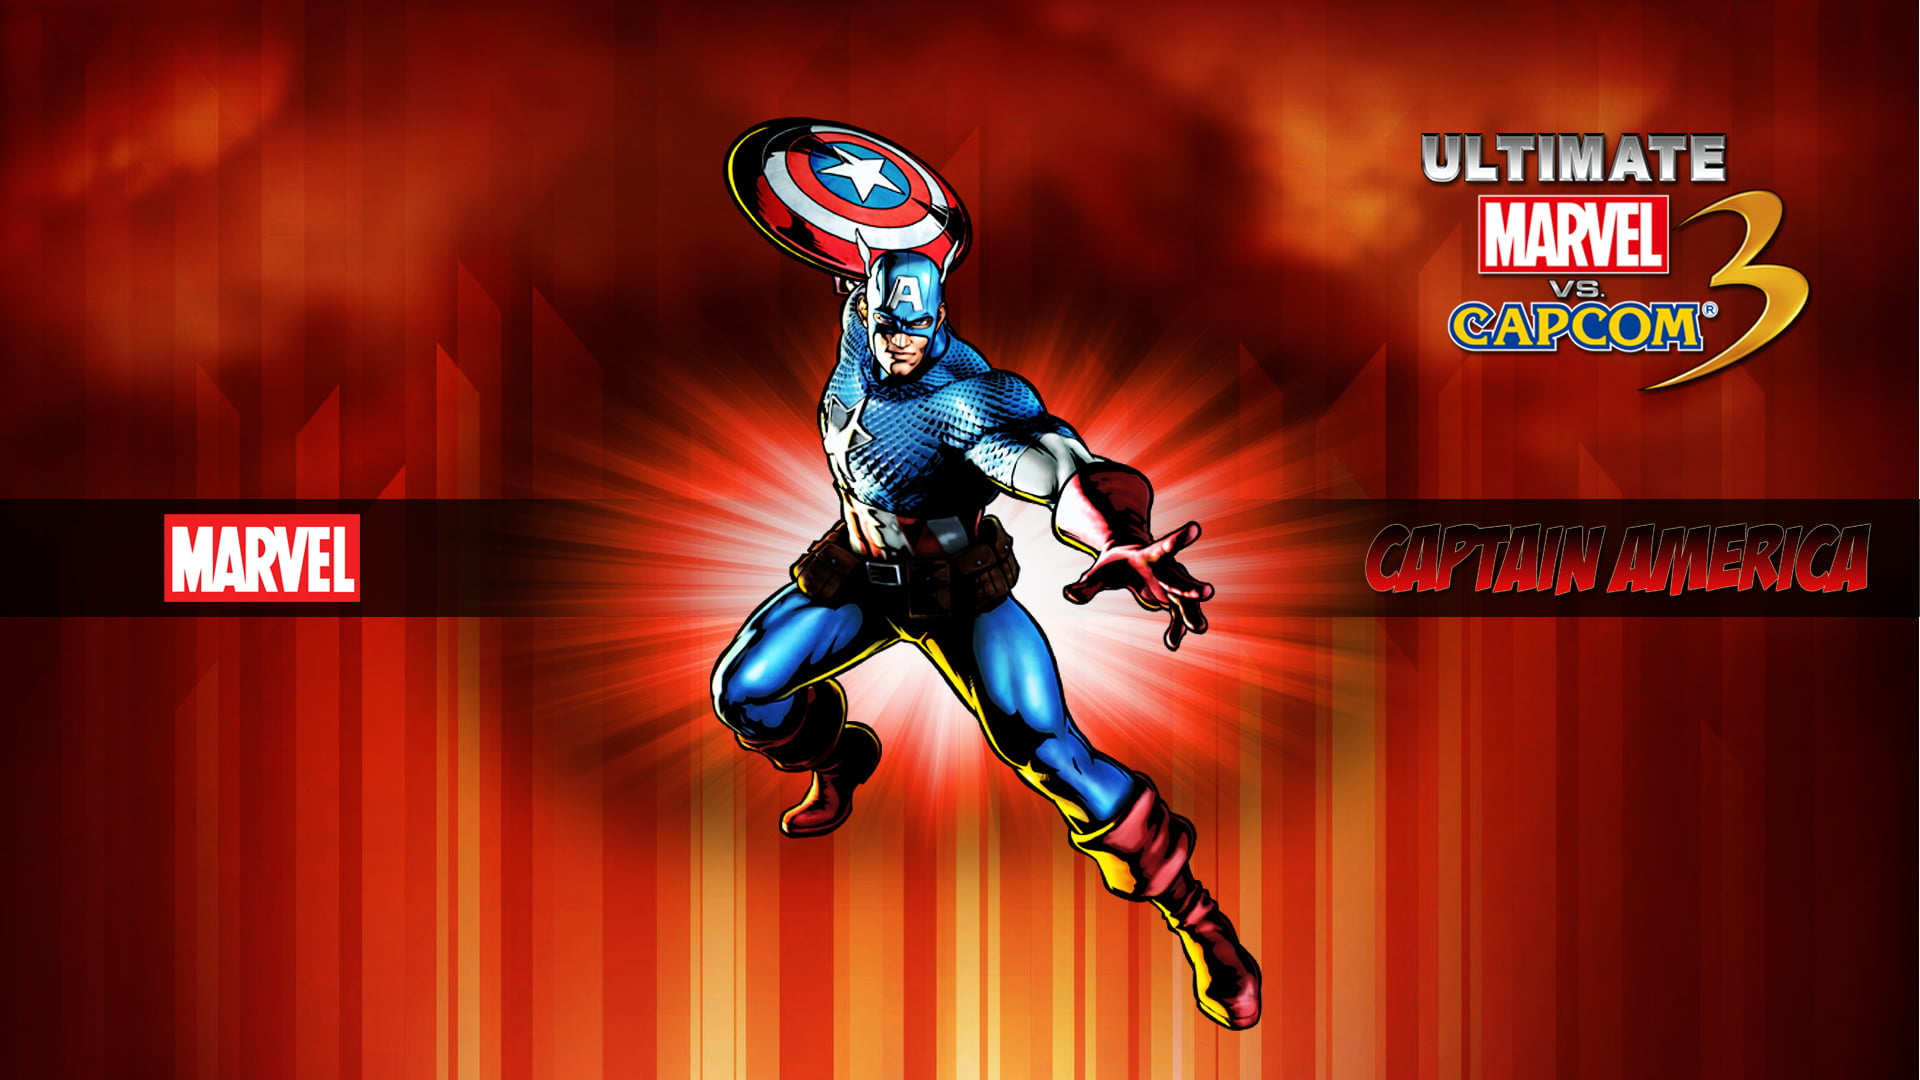 Marvel Captain American wallpaper, Marvel vs. Capcom 3, Captain America